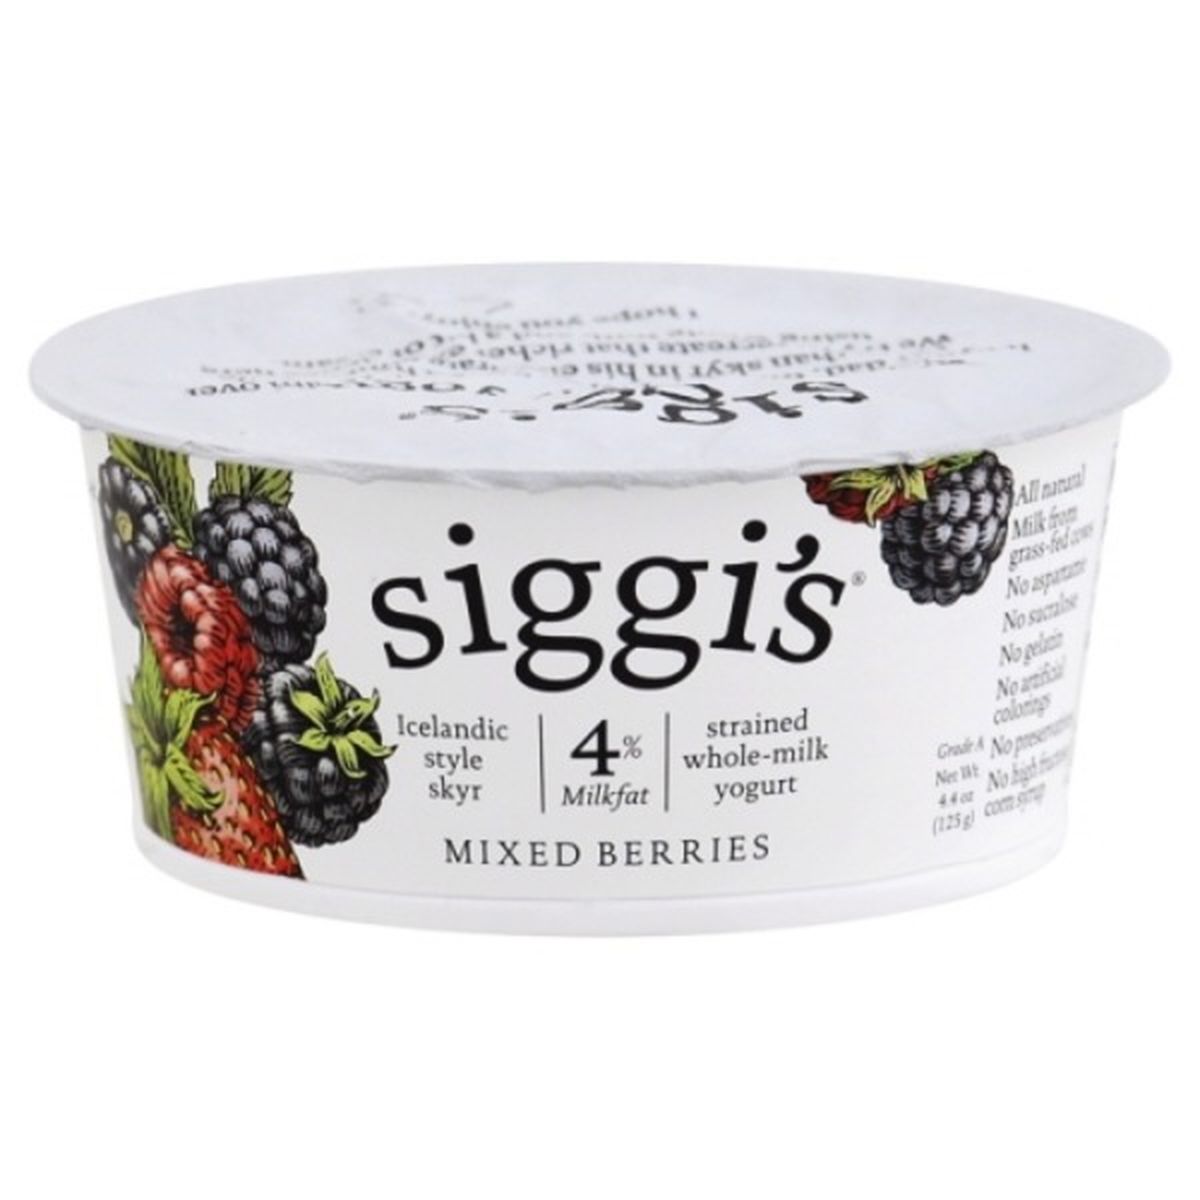 Calories in Siggi's Yogurt, Whole-Milk, Icelandic Style Skyr, Strained, Mixed Berries